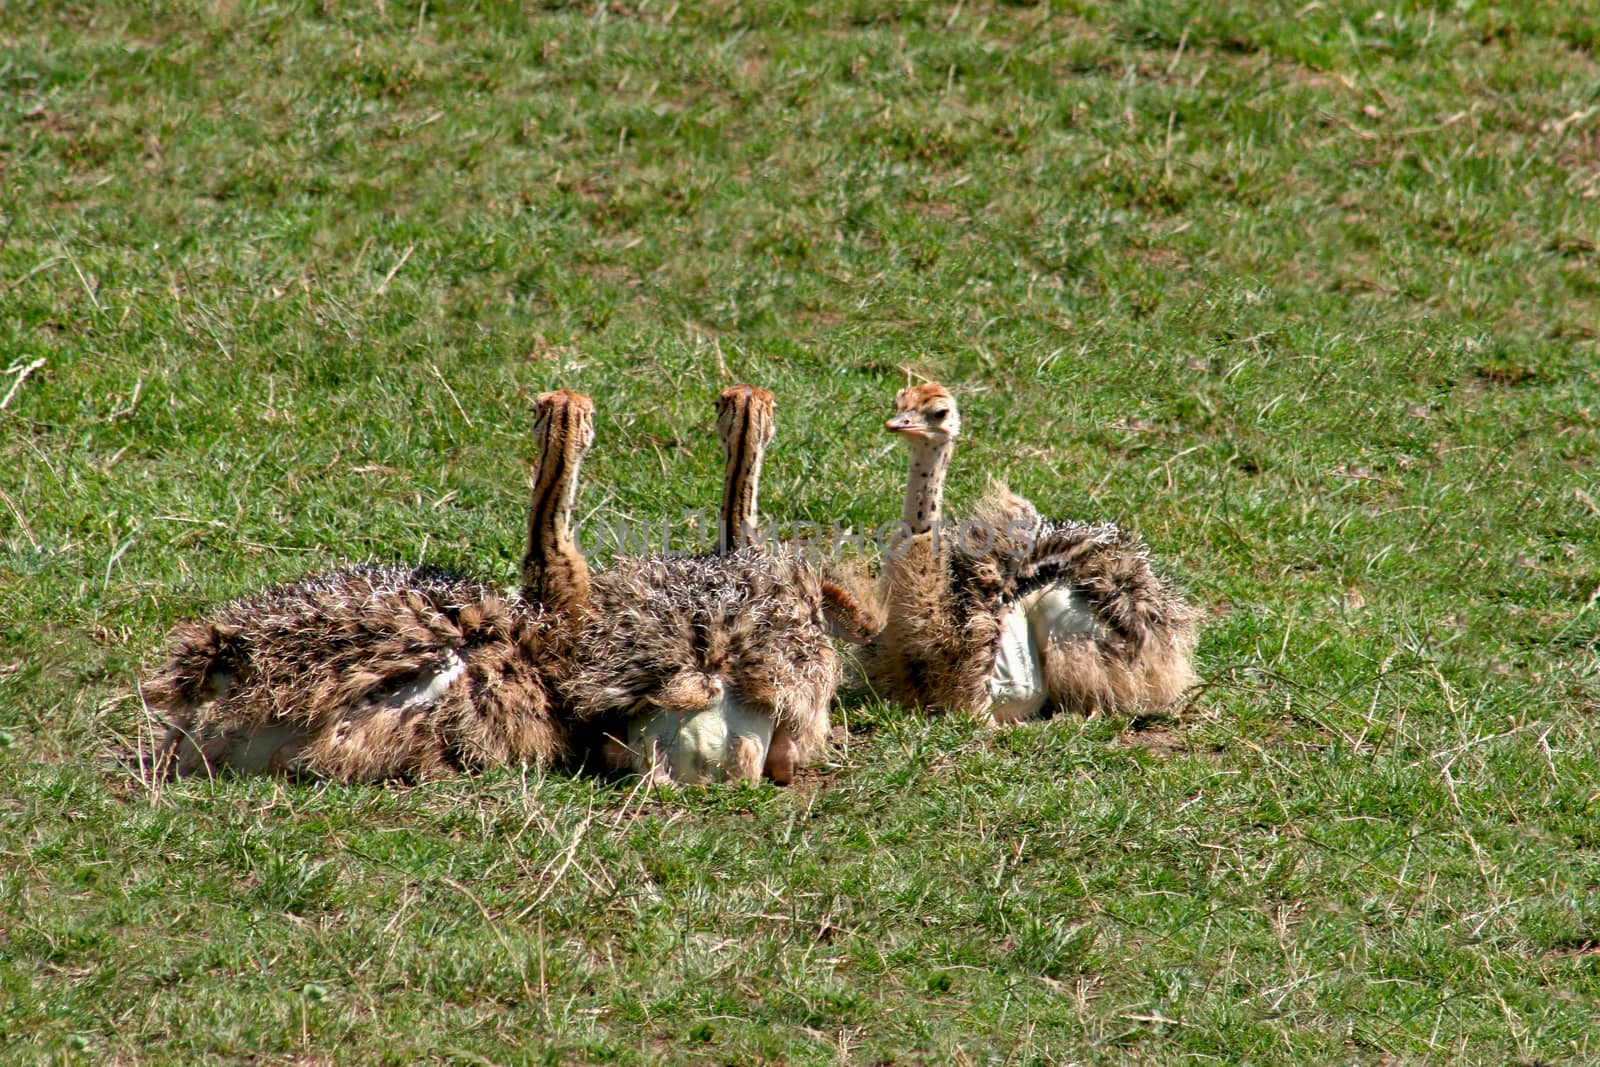 Three ostrich chicks sitting on the grass